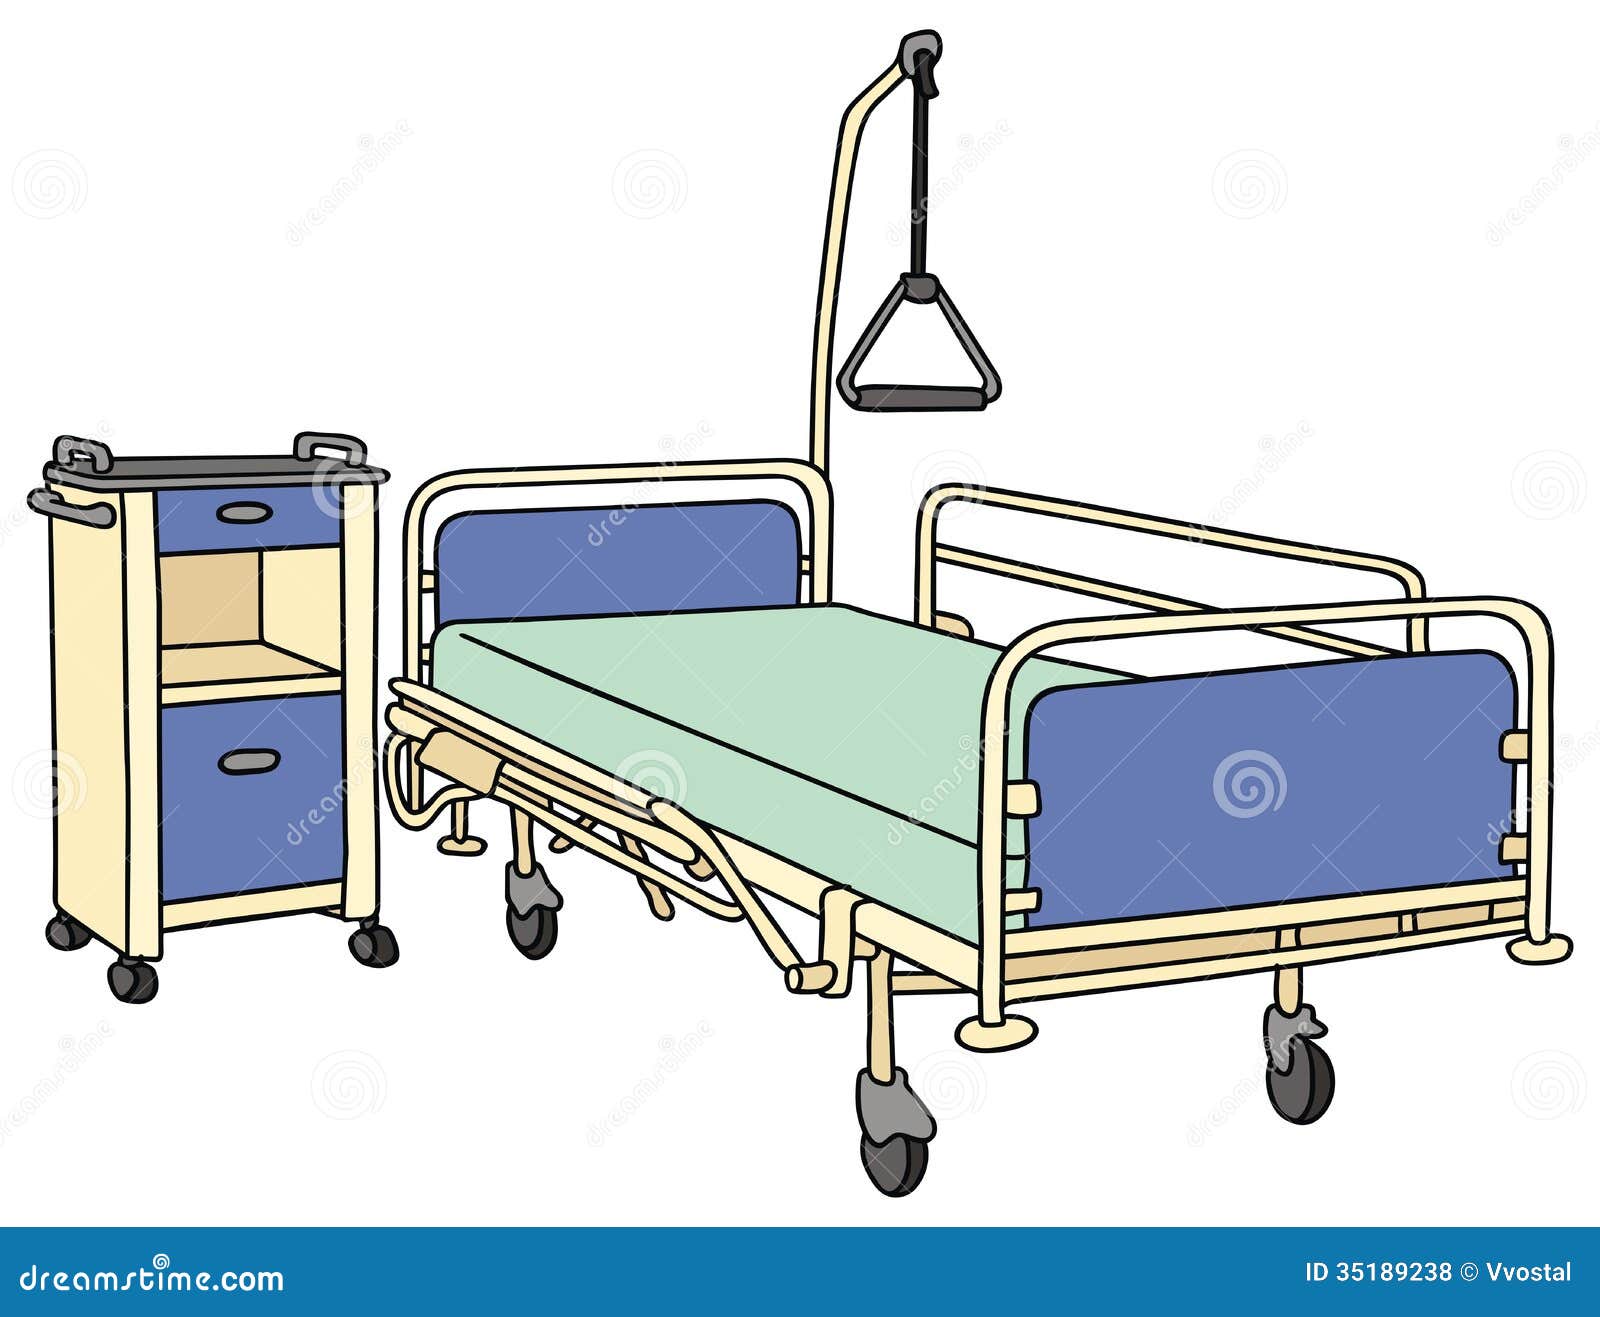 Hospital Room Clipart Hospital bed